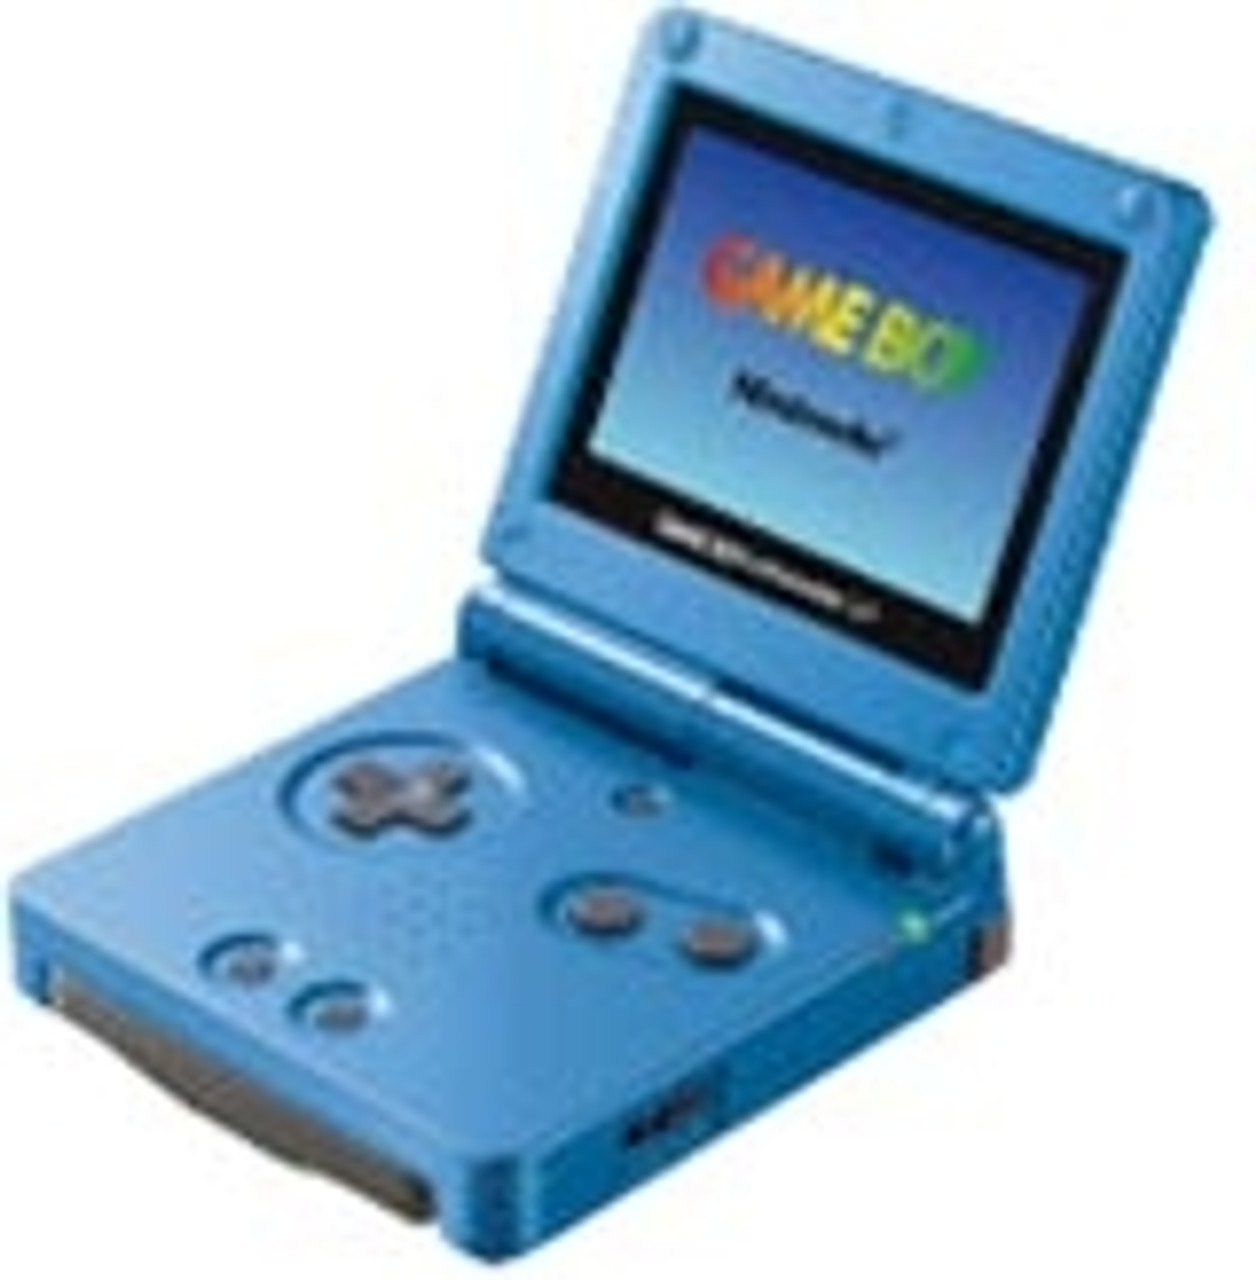 Nintendo Gameboy SP bleu Game Boy Advance console GBA plus chargeur grade B